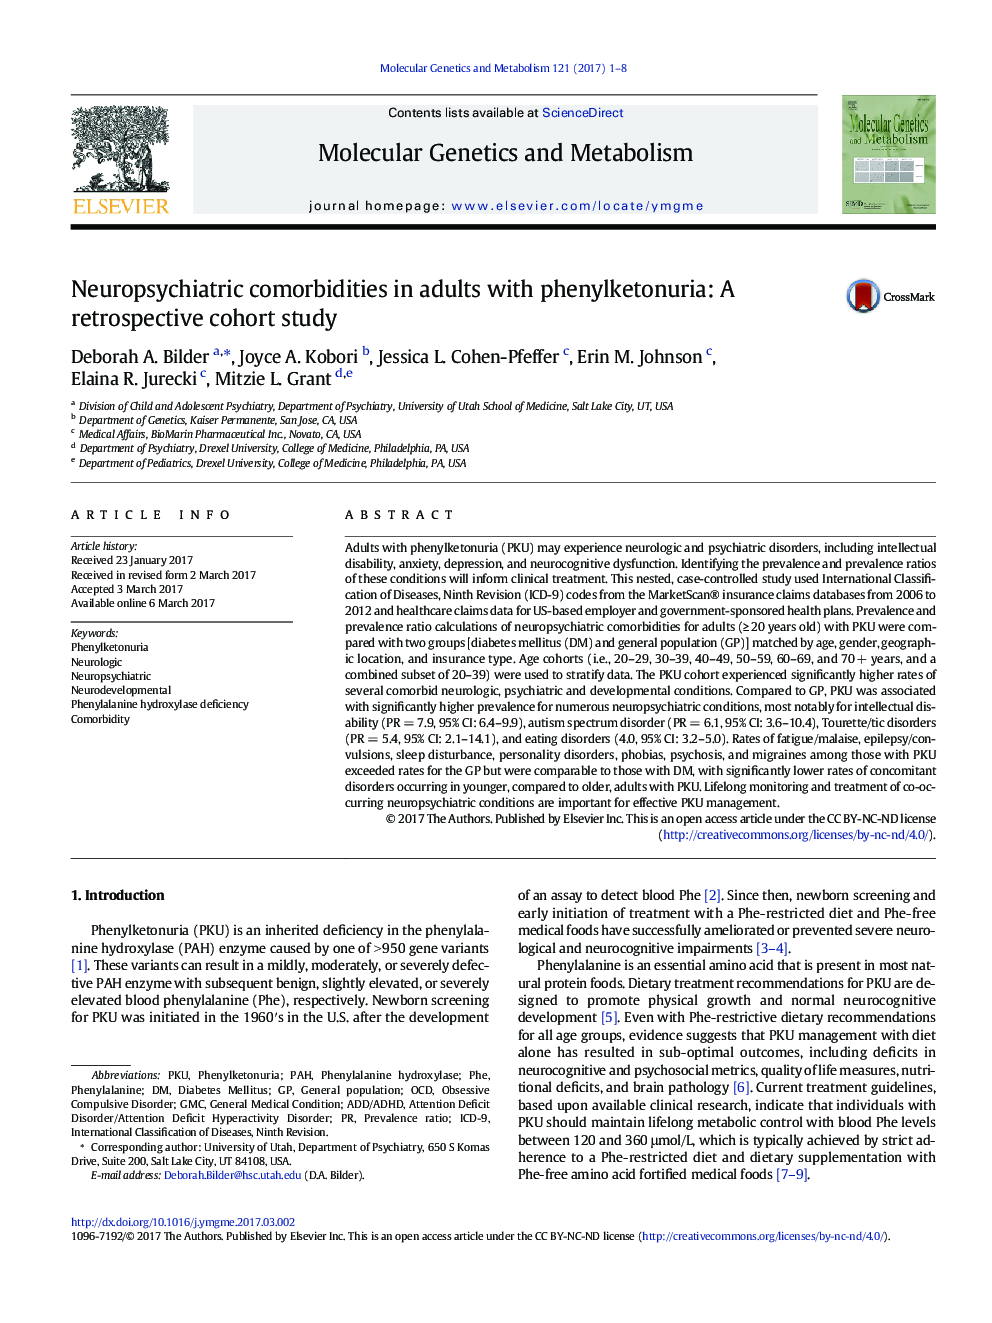 Neuropsychiatric comorbidities in adults with phenylketonuria: A retrospective cohort study